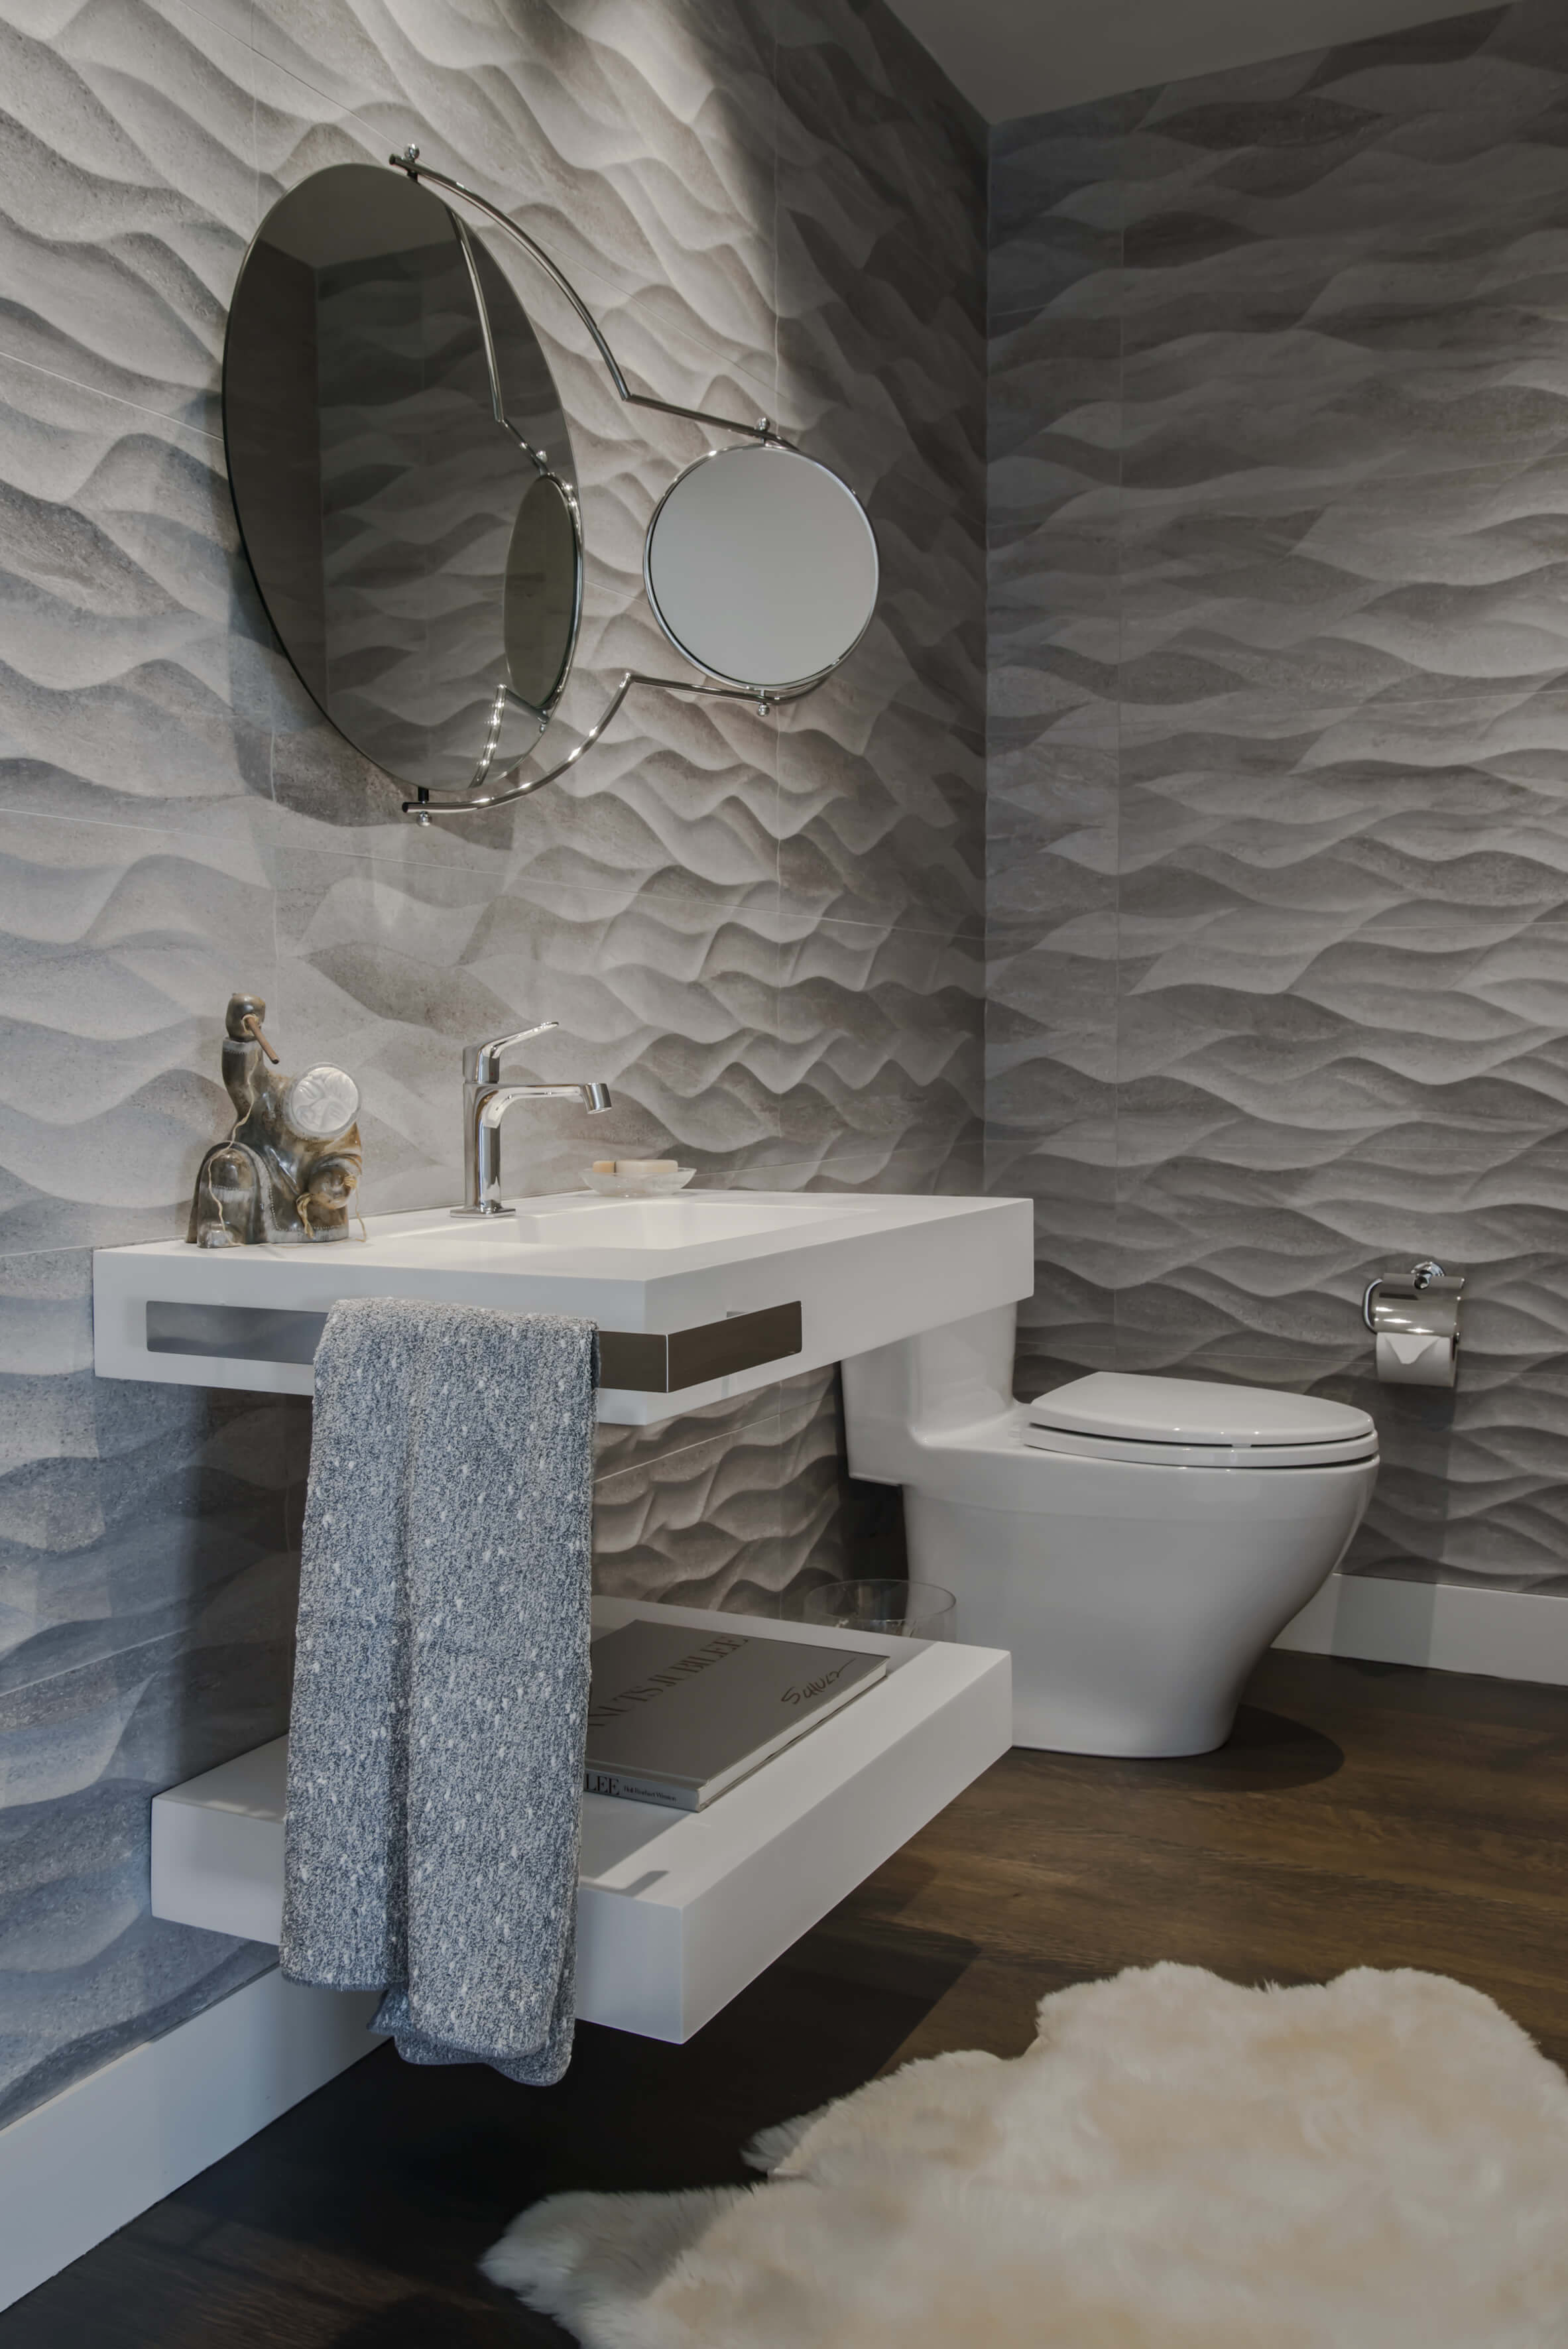 Porcelanosa textured tile bathroom and custom sink with vanity design by interior designer Renan Menninger of RM Interiors.